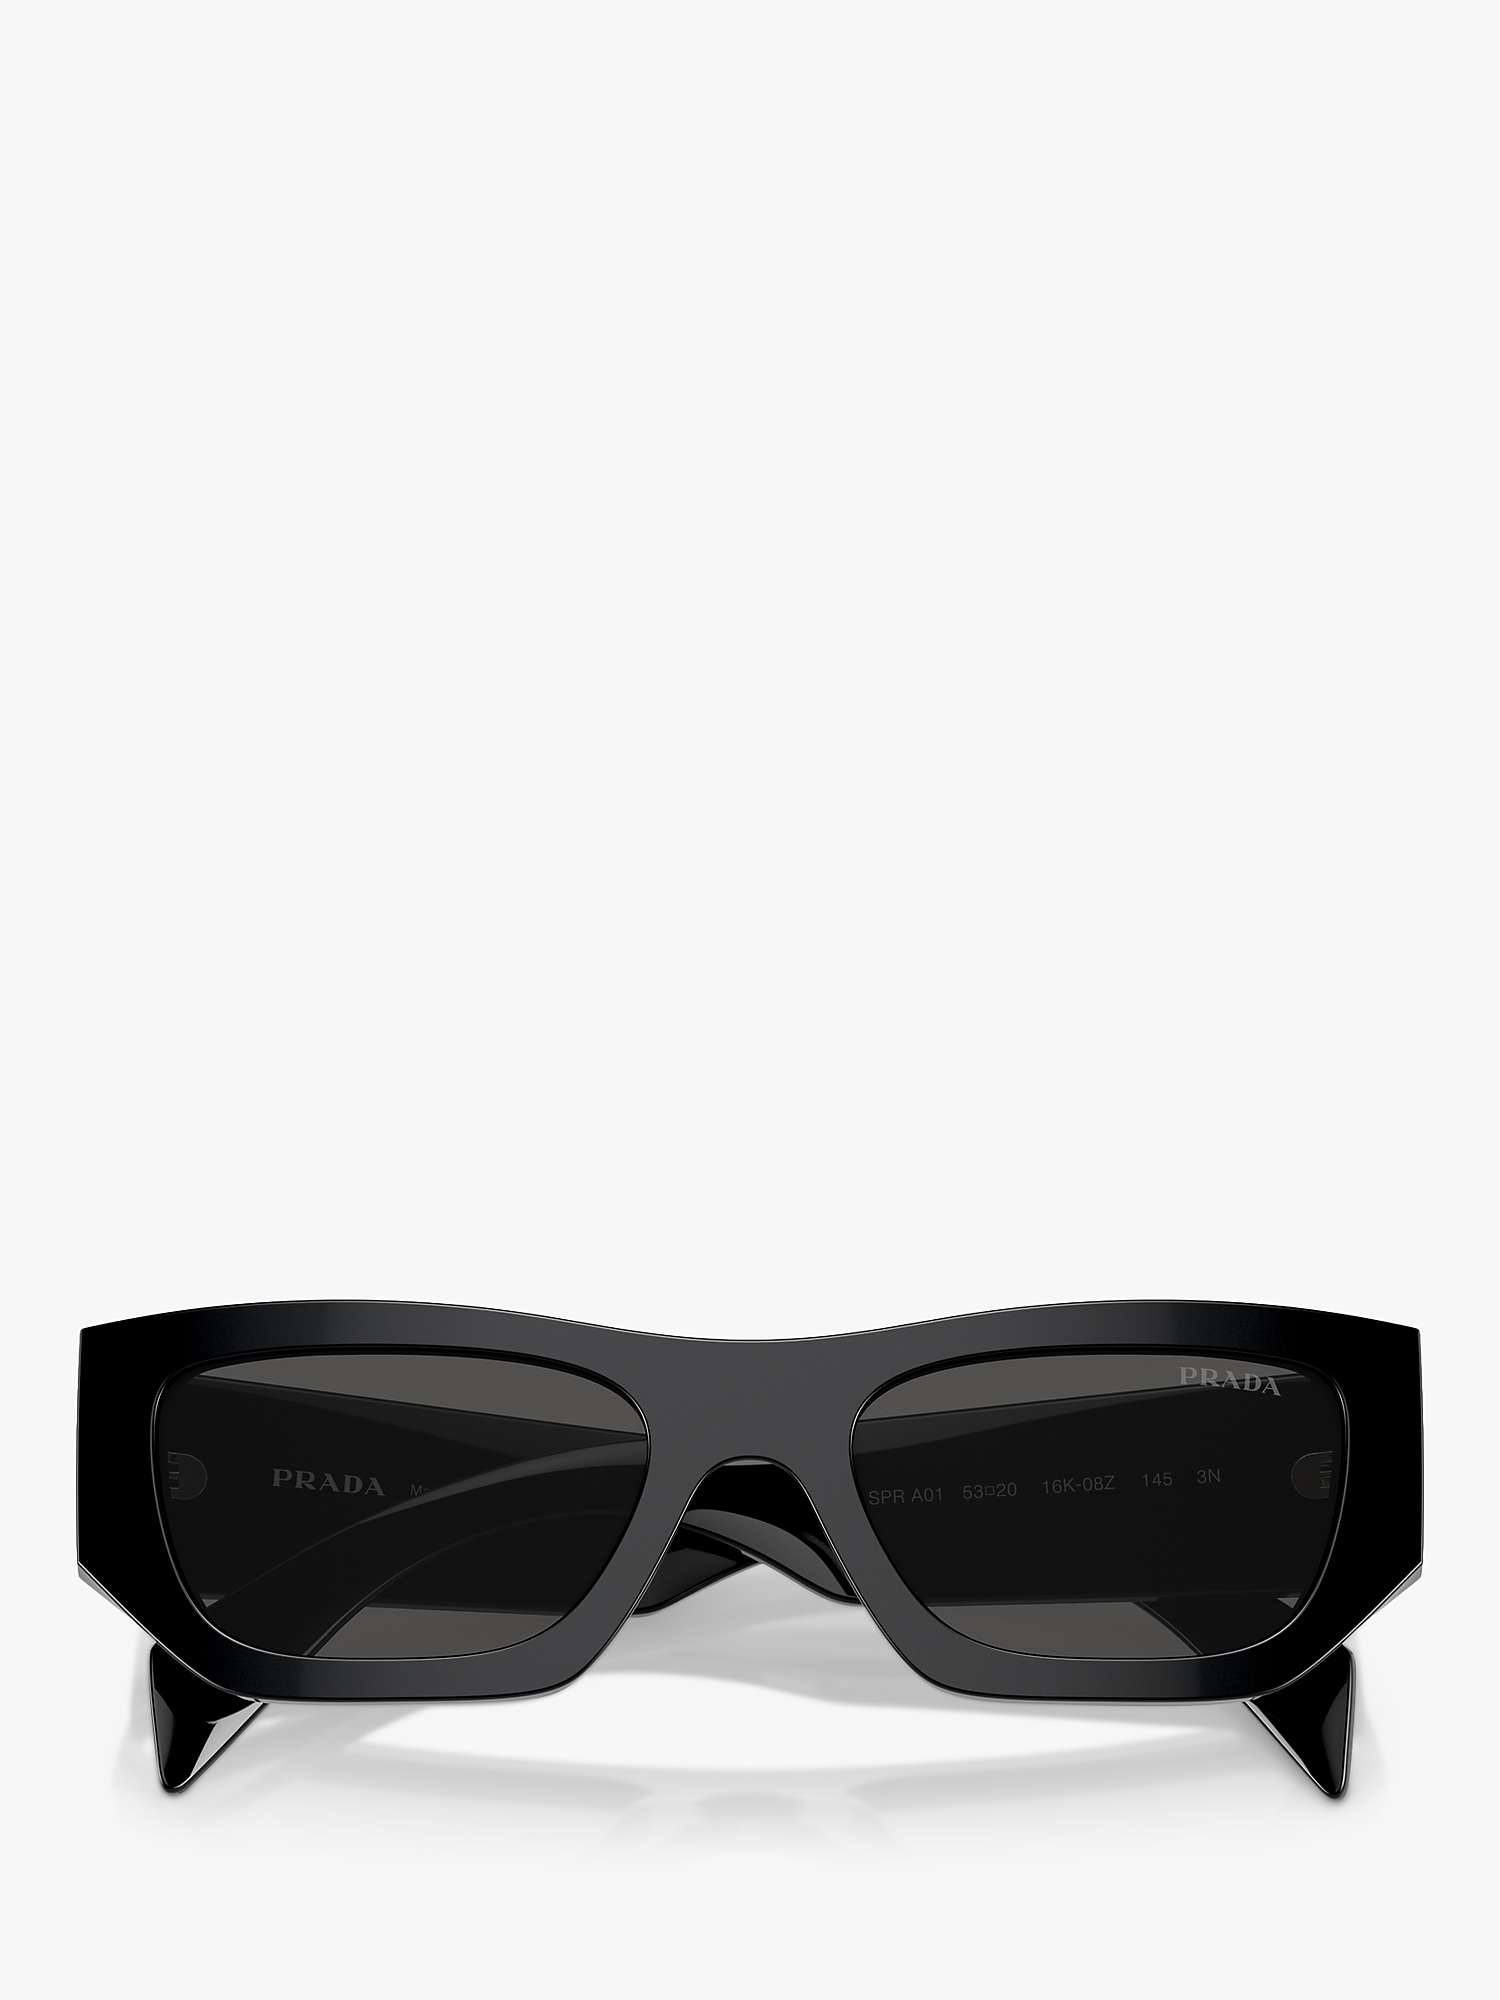 Buy Prada PR A01S Women's Rectangular Sunglasses, Black/Grey Online at johnlewis.com